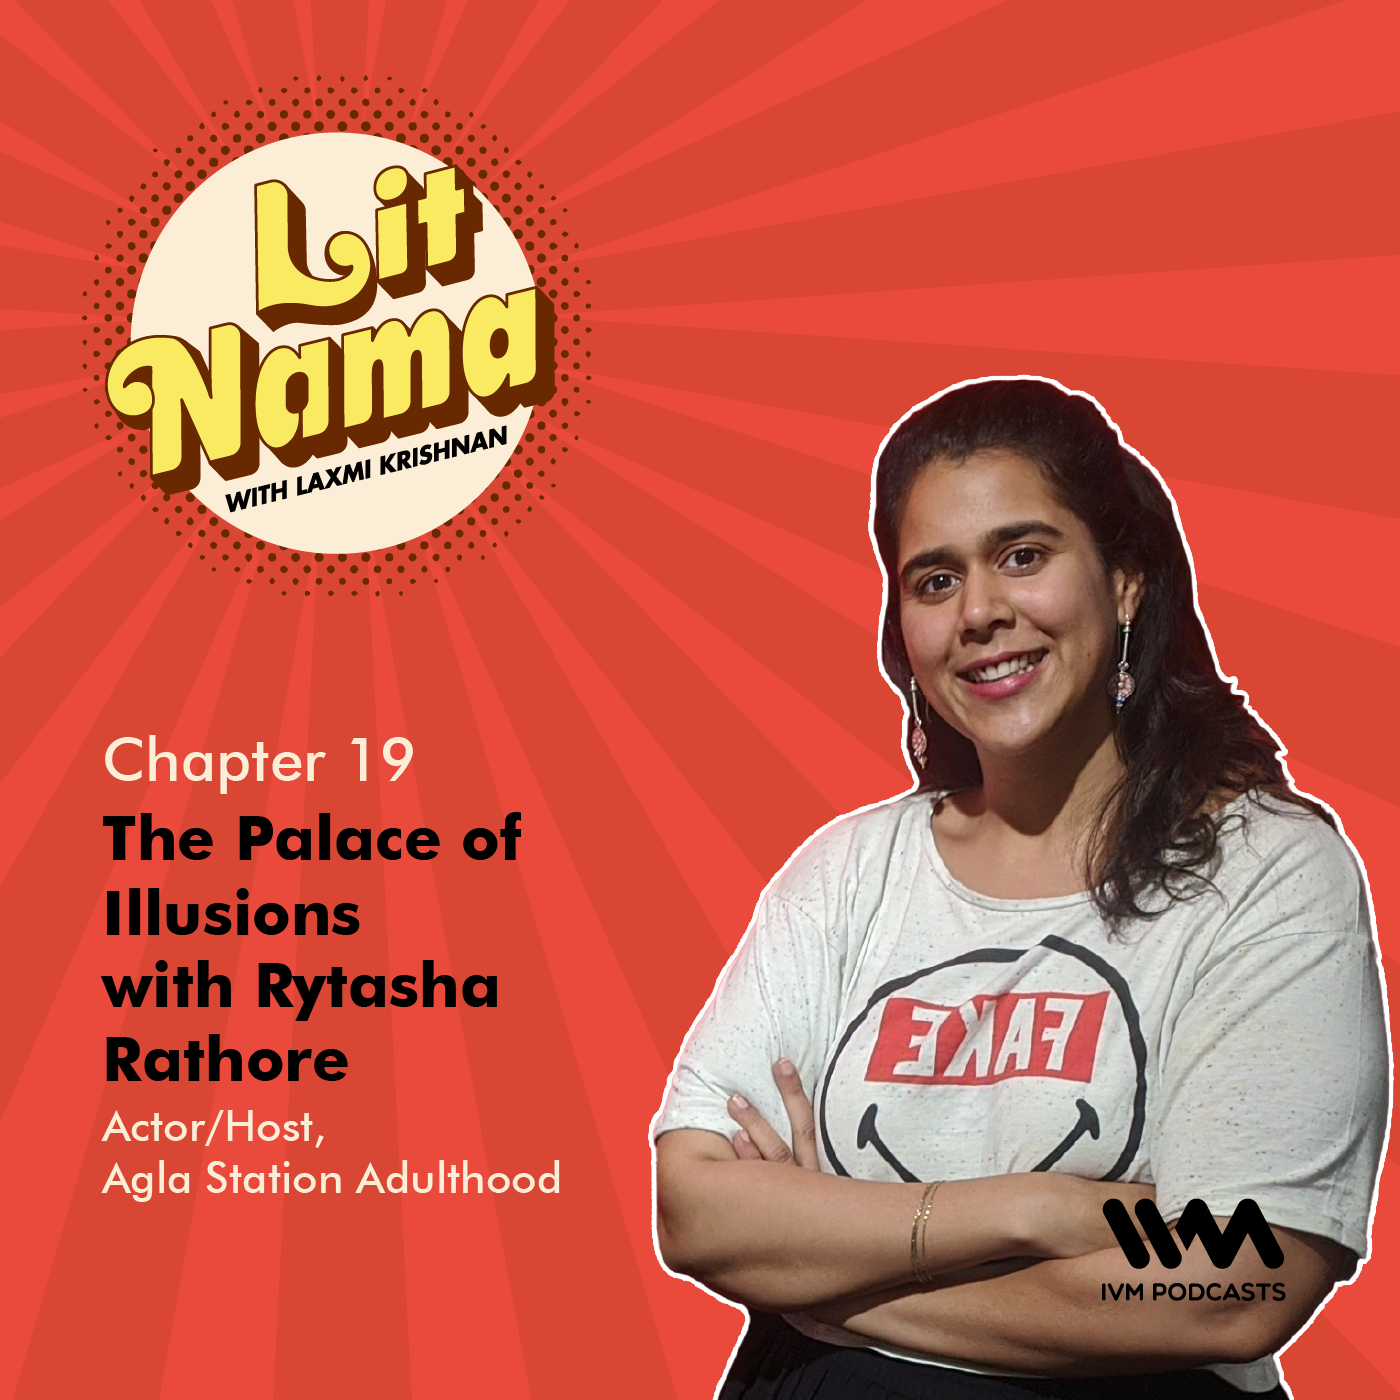 Chapter. 19: The Palace of Illusions with Rytasha Rathore